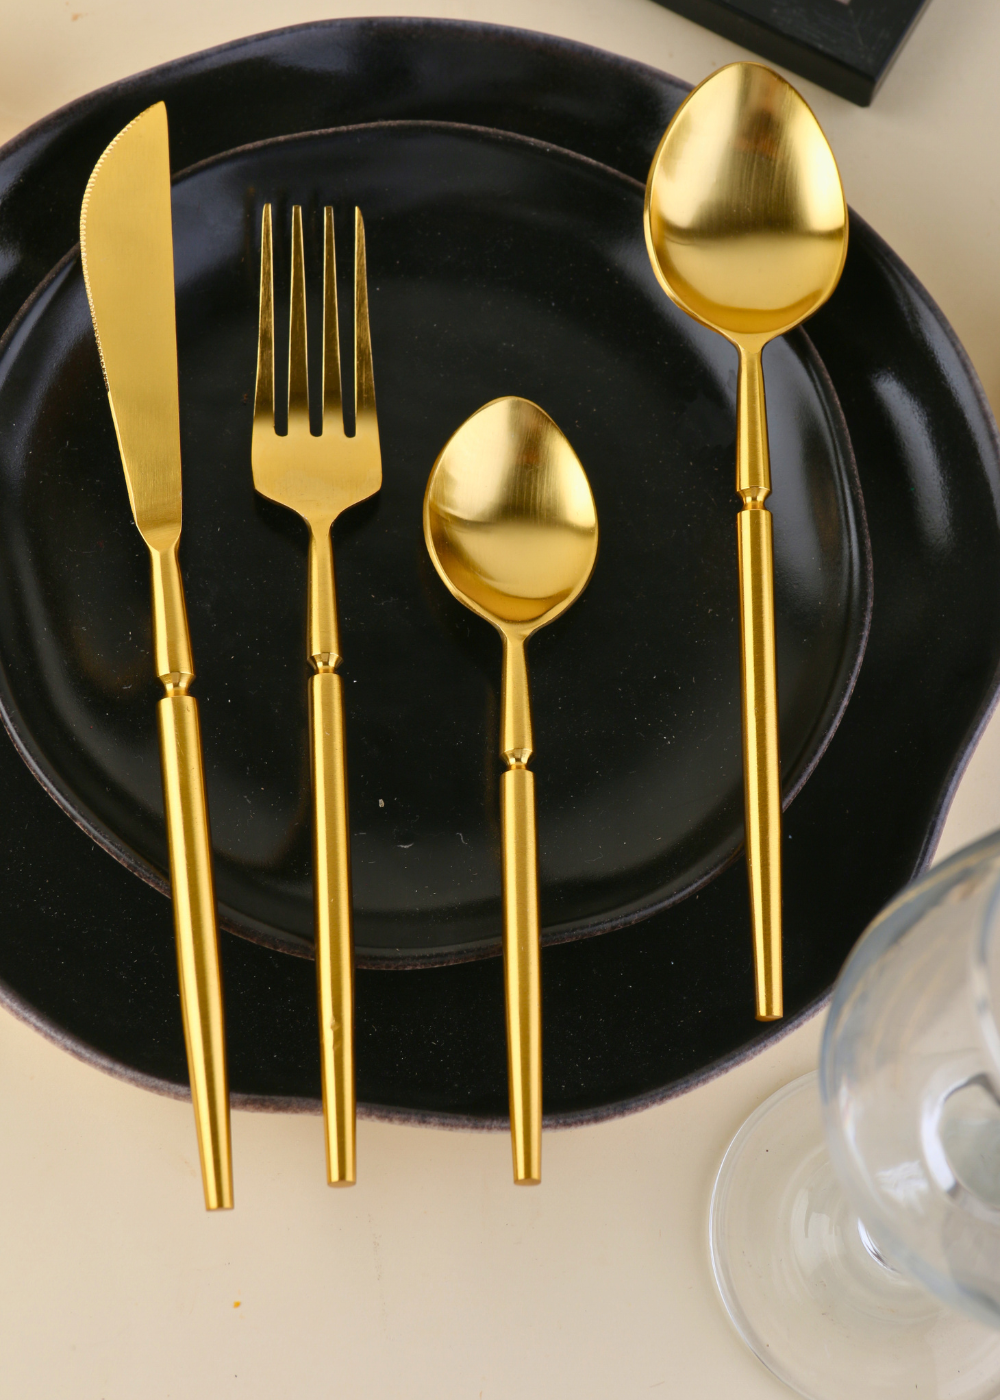 golden cutlery set with premium golden color